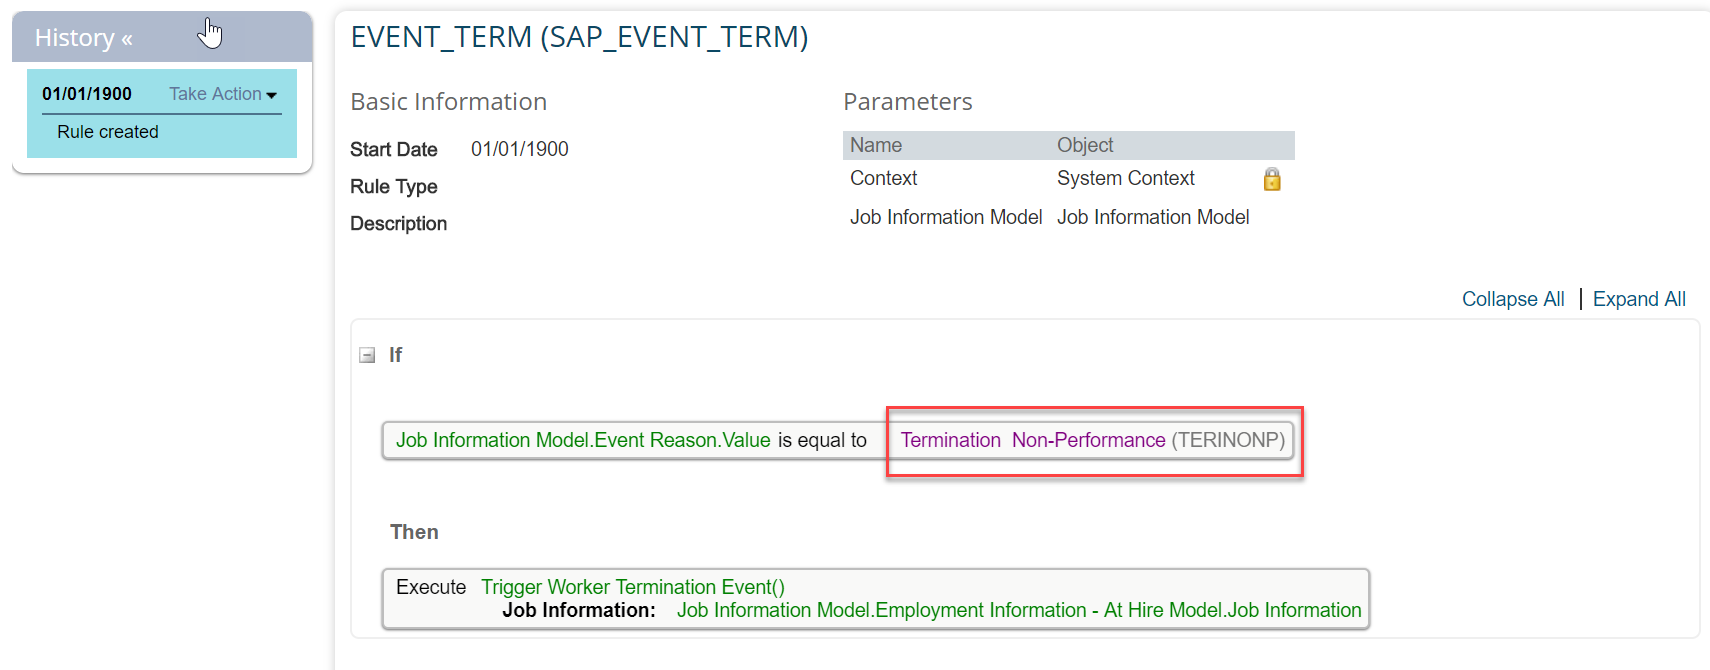 SAP_EVENT_TERM.png